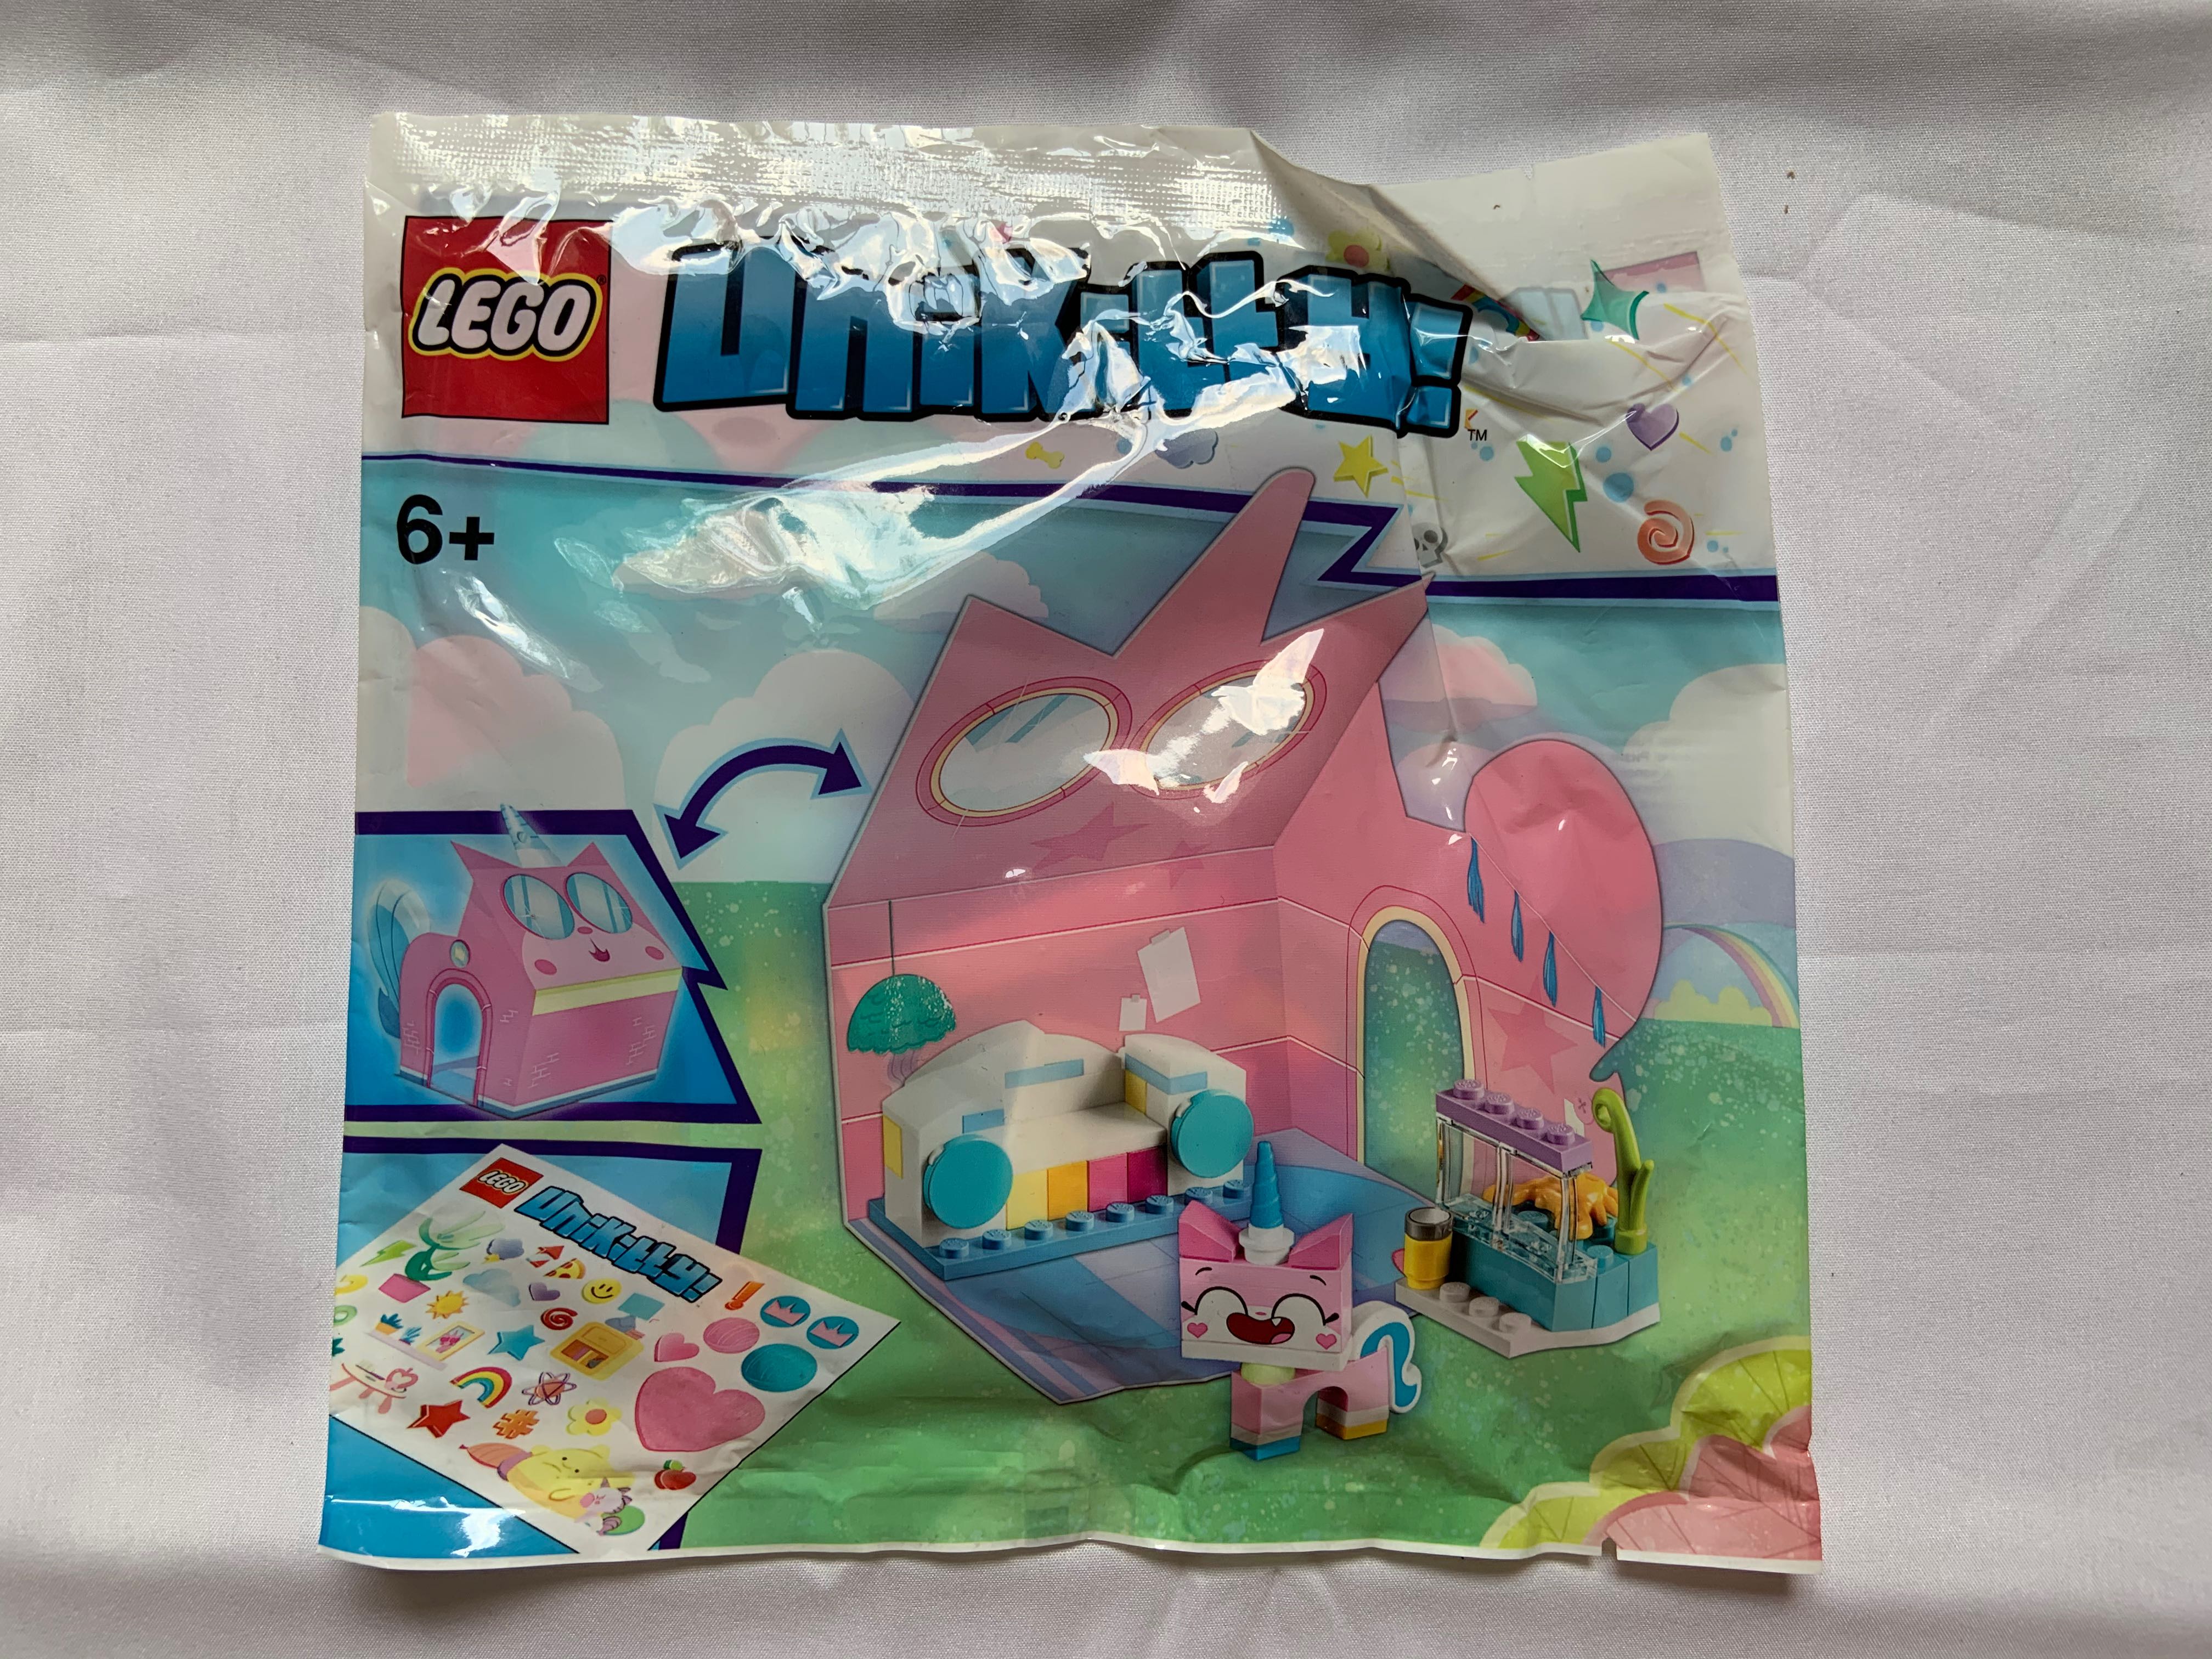 lego-5005239-unikitty-castle-room-polybag-hobbies-toys-toys-games